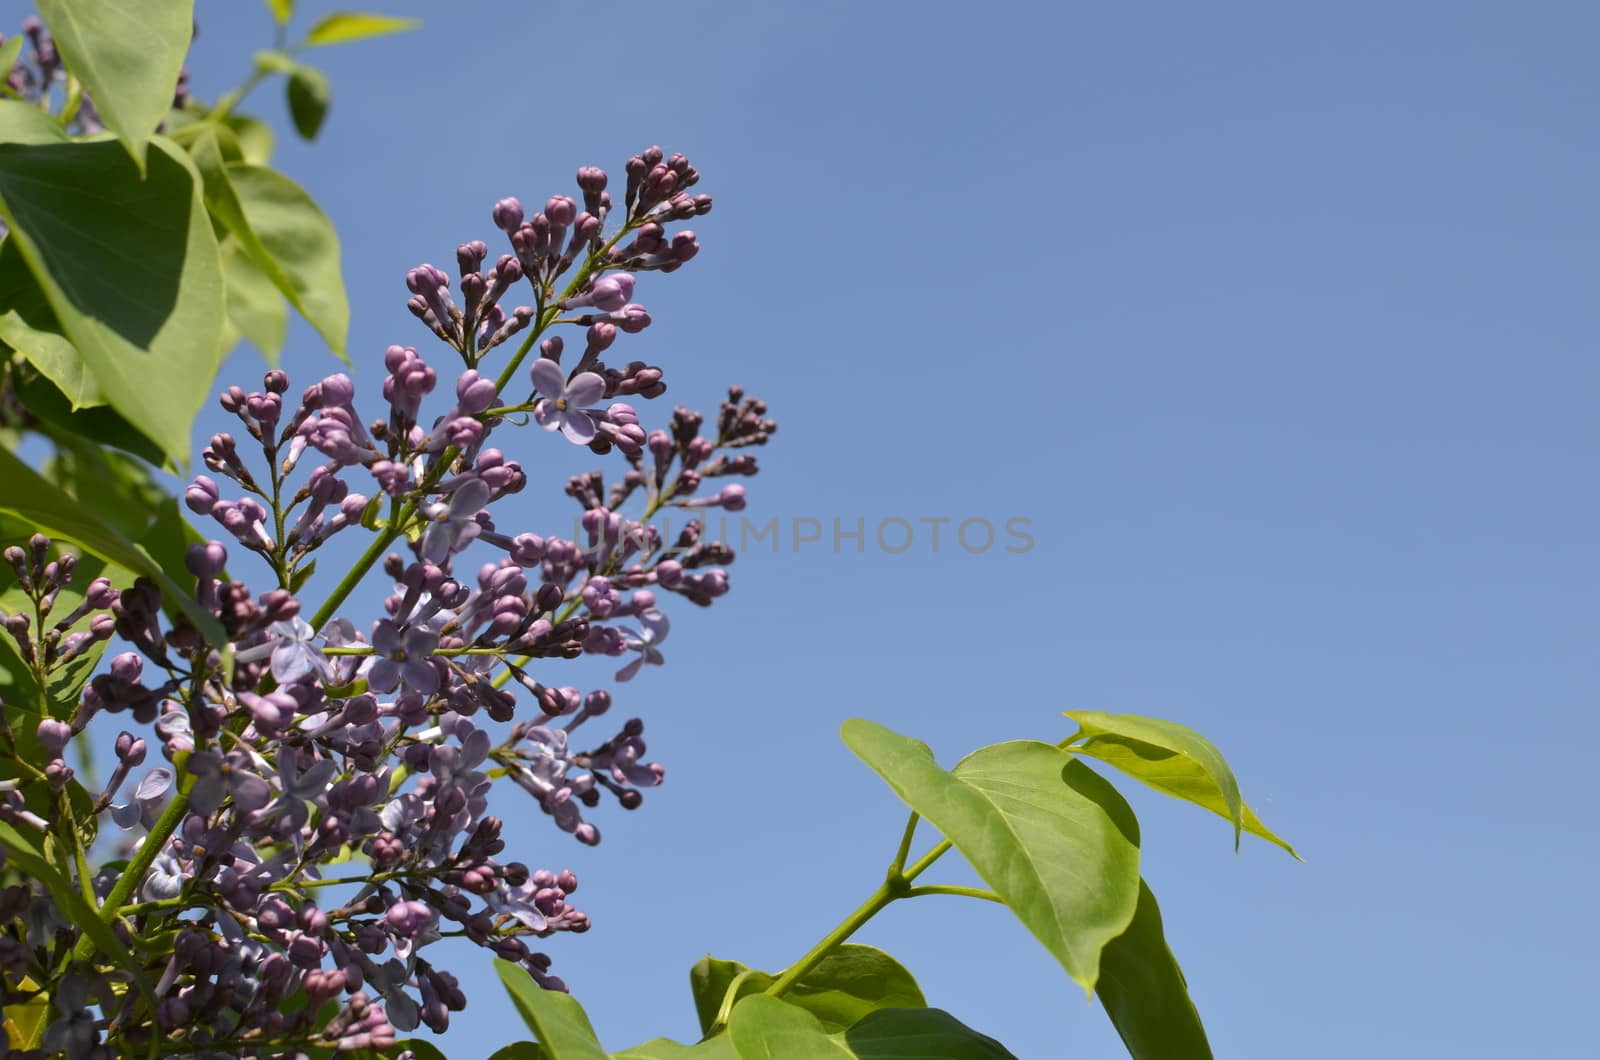 Violet Flower with Green Leaves on Blue Sky Brackground